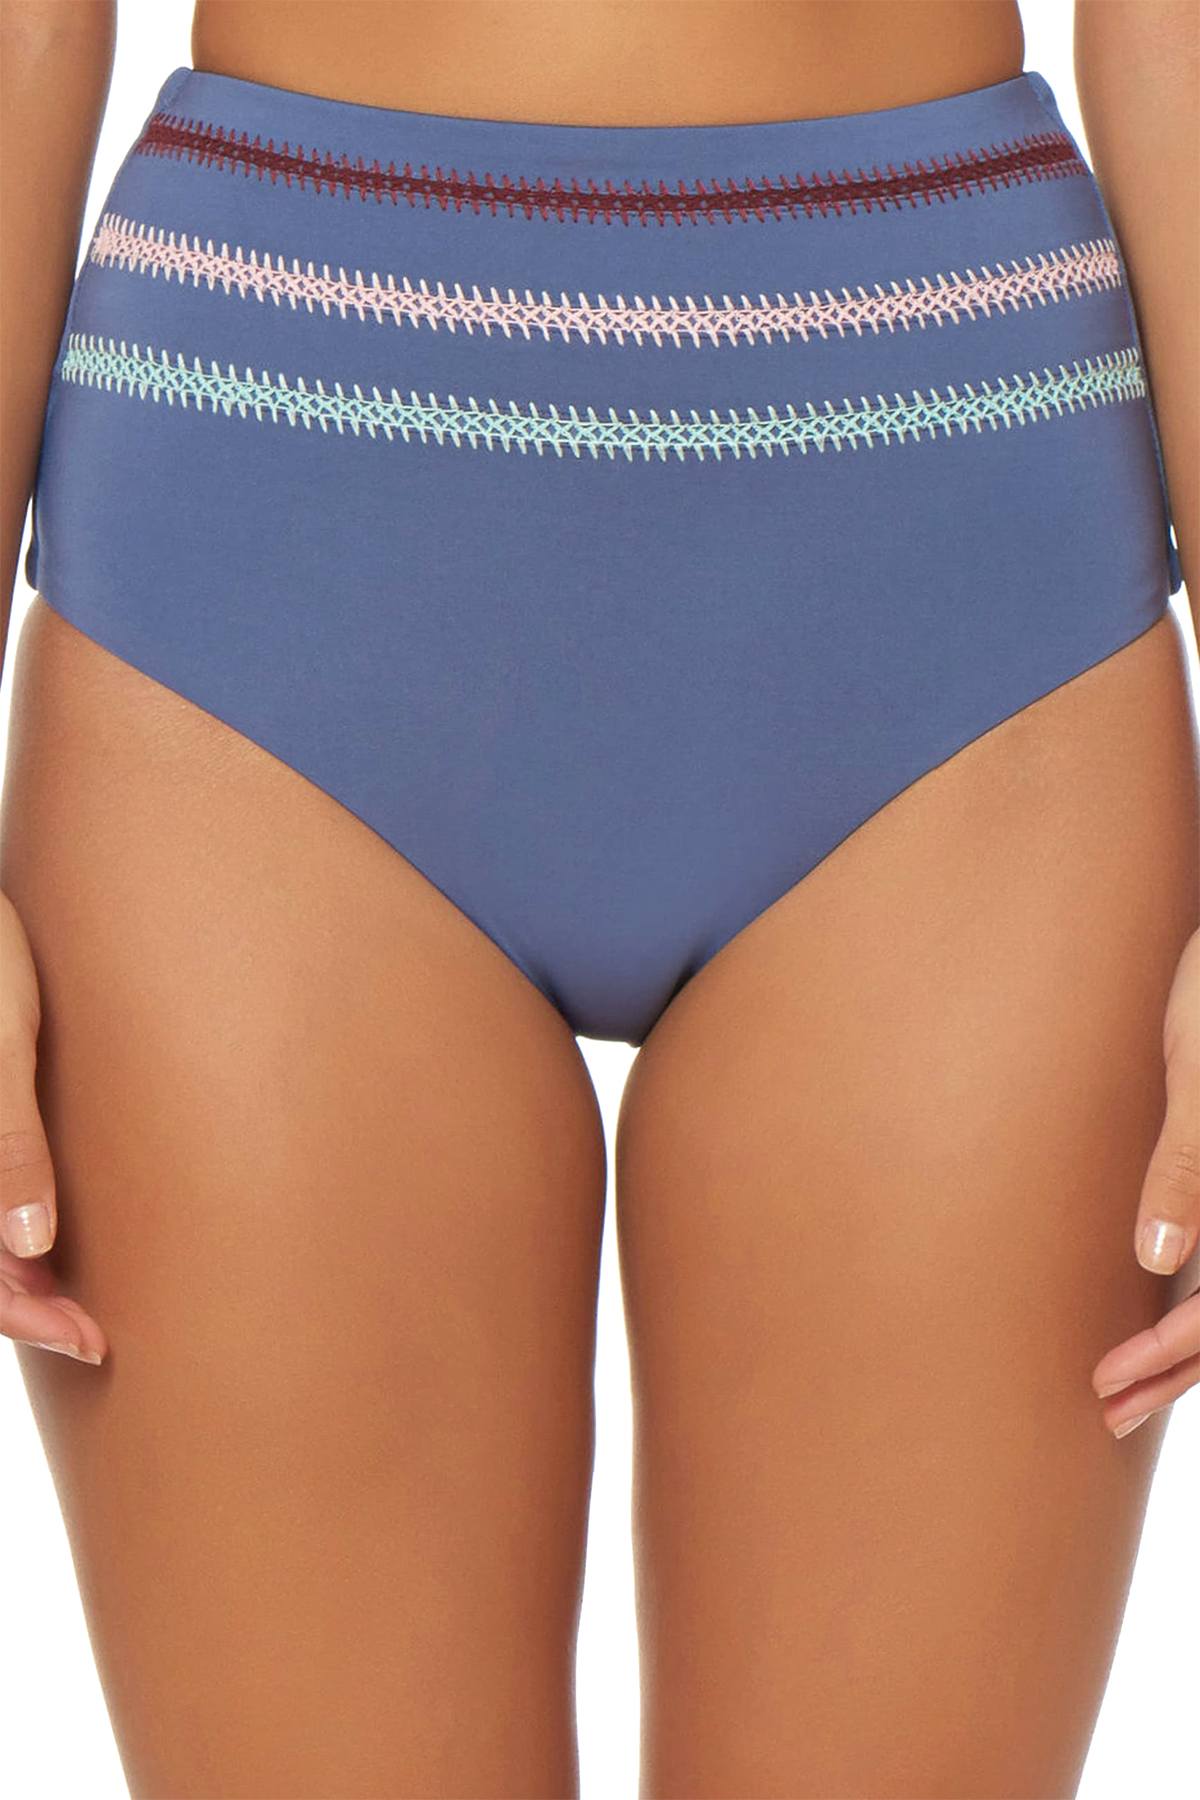 Dolce Vita Embroidered High Waist Bikini Bottom in Pigeon Blue